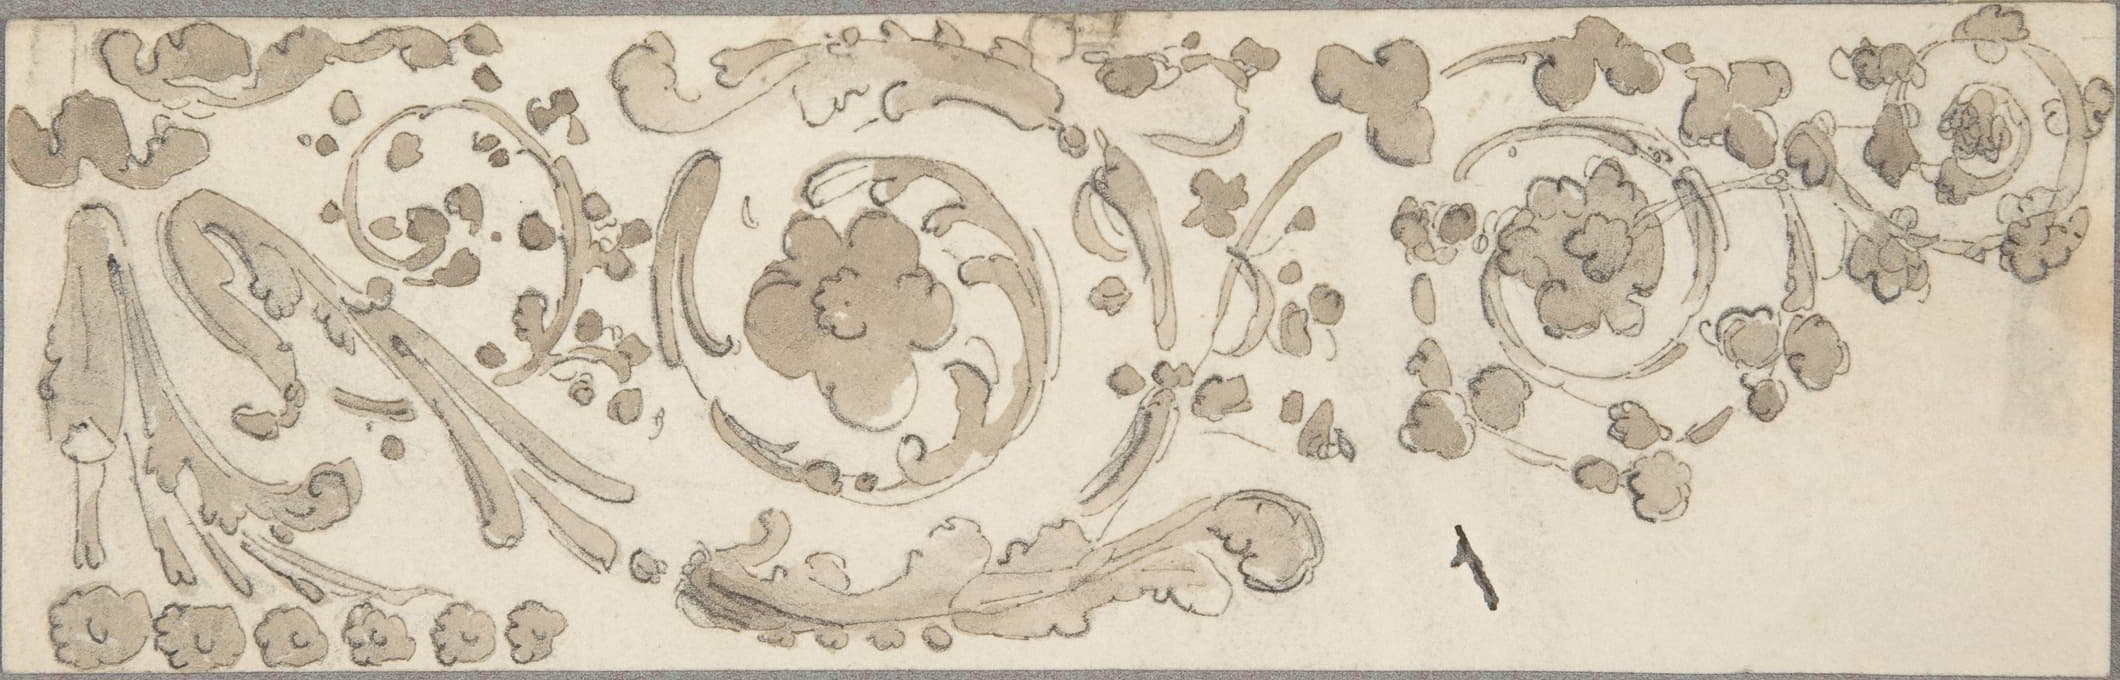 William Pitts - Sketch of Foliate Decoration